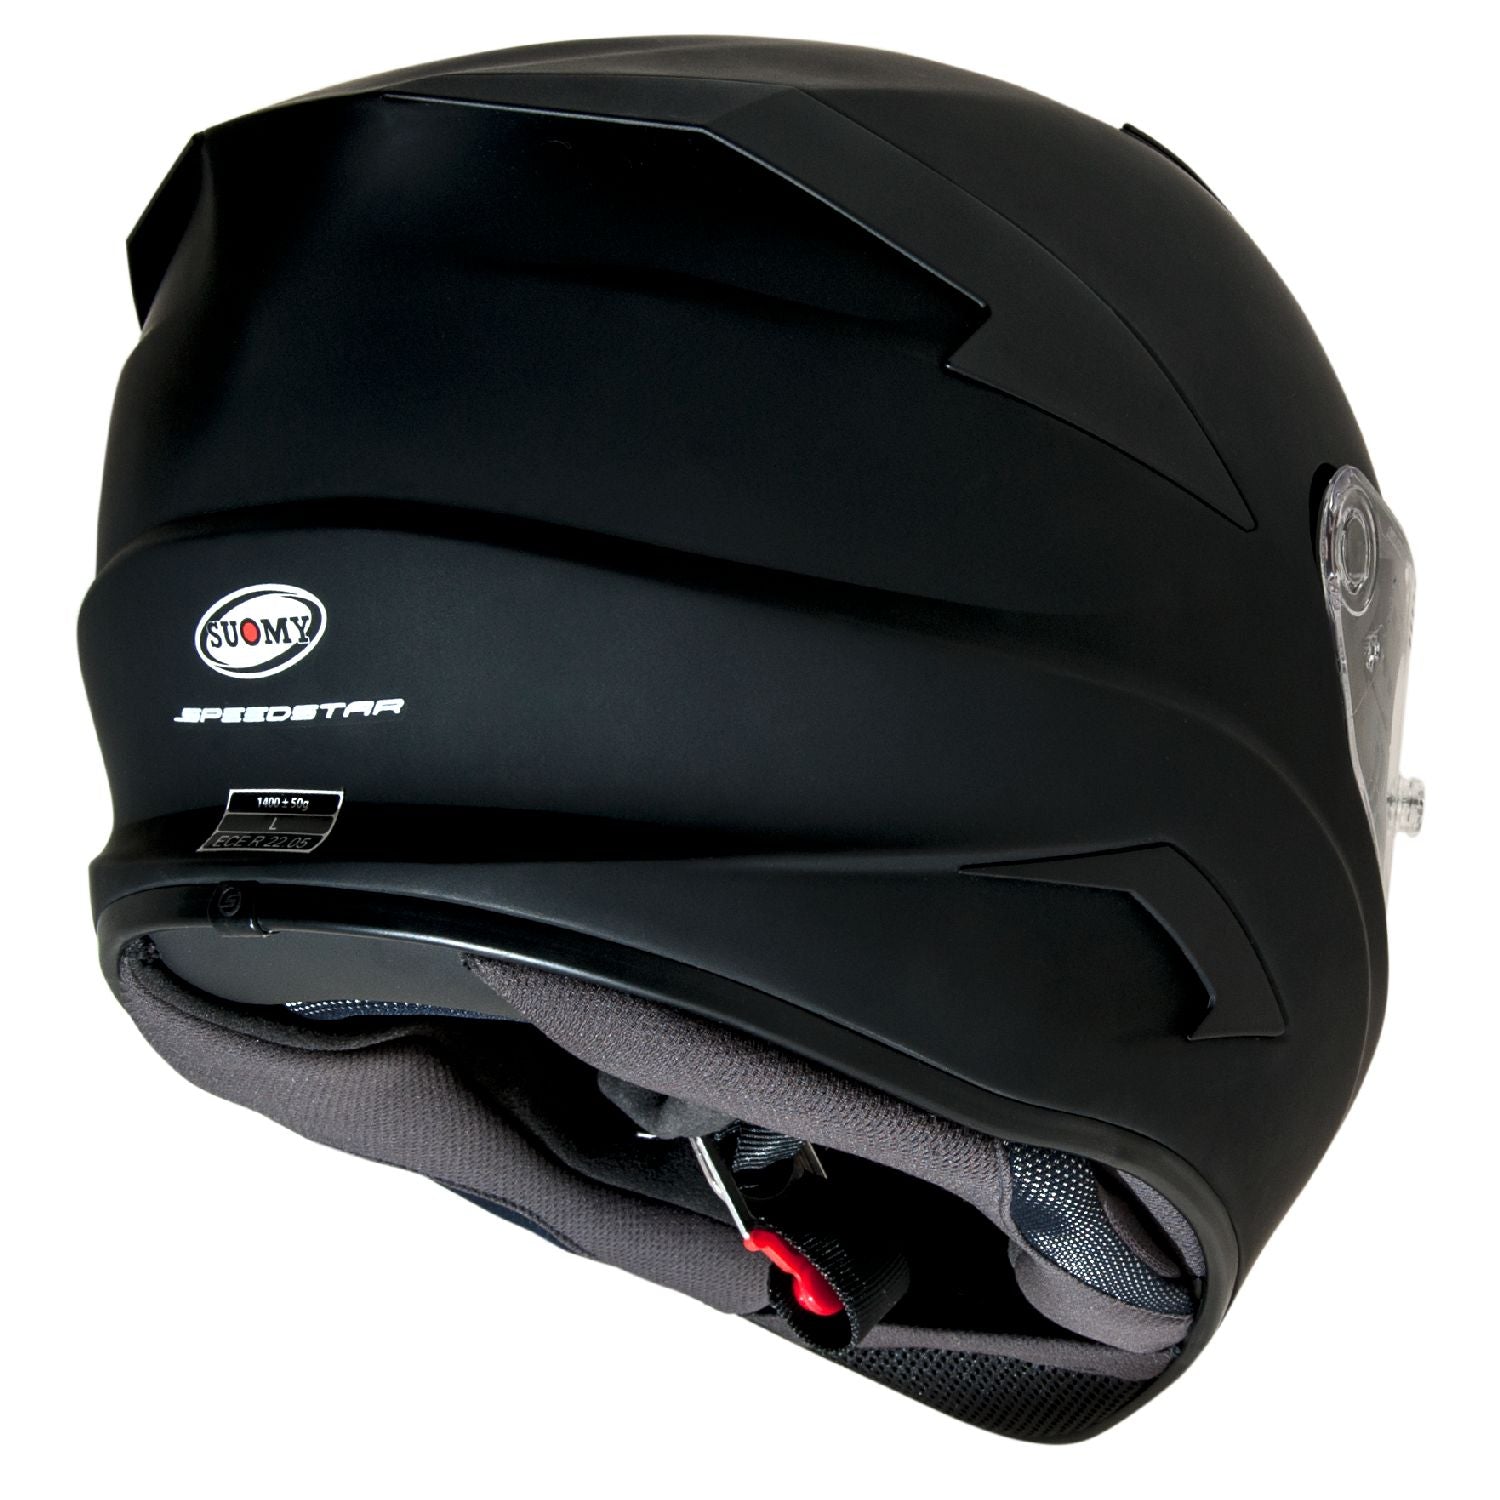 Suomy Speedstar Solid Matte Black Full Face Motorcycle Helmet (XS - 2XL)